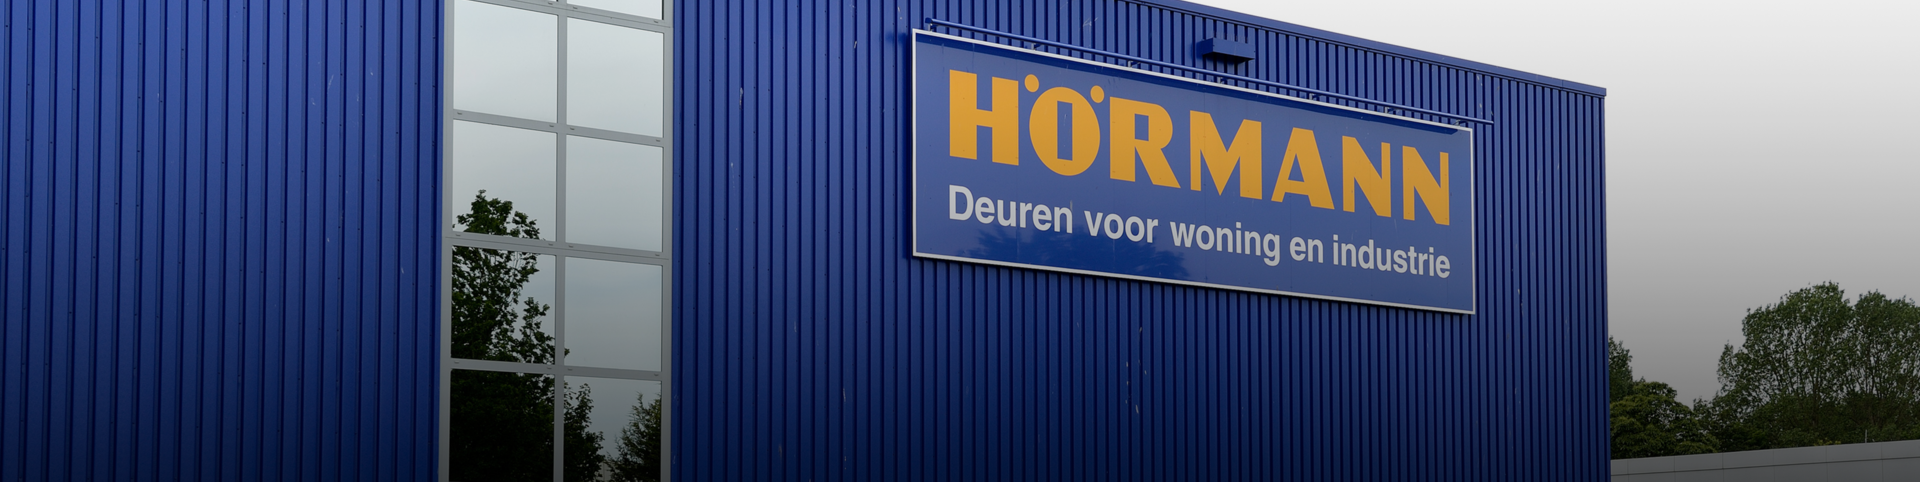 hormann-banner.png